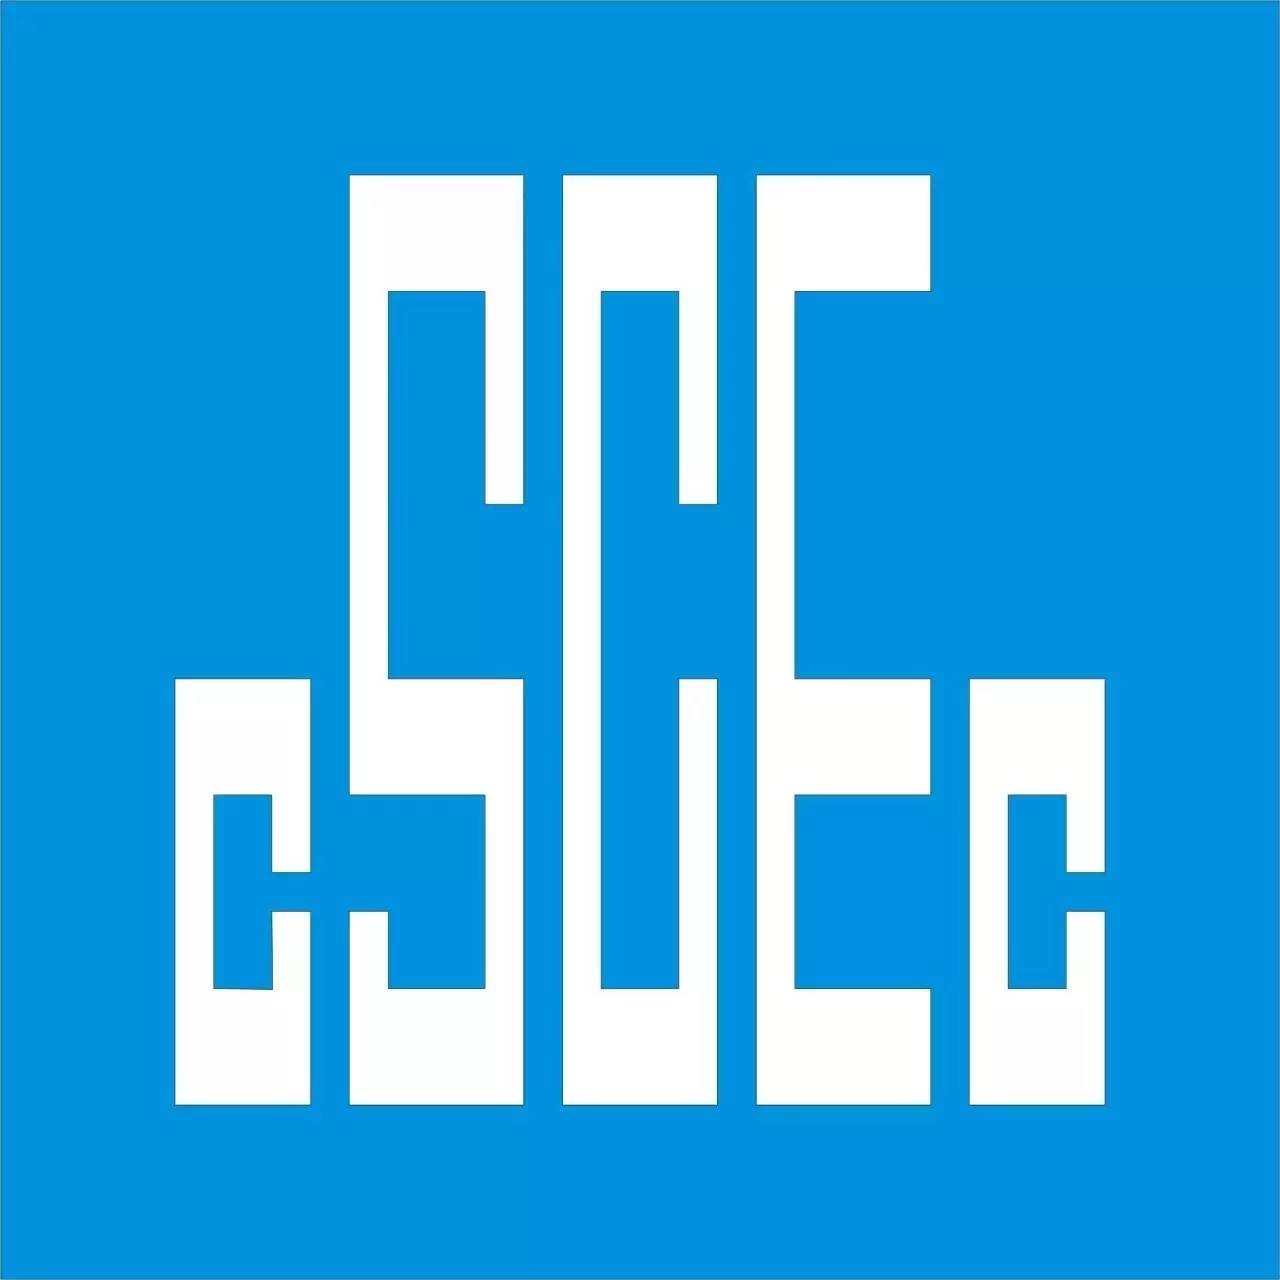 CSC Brand Logo